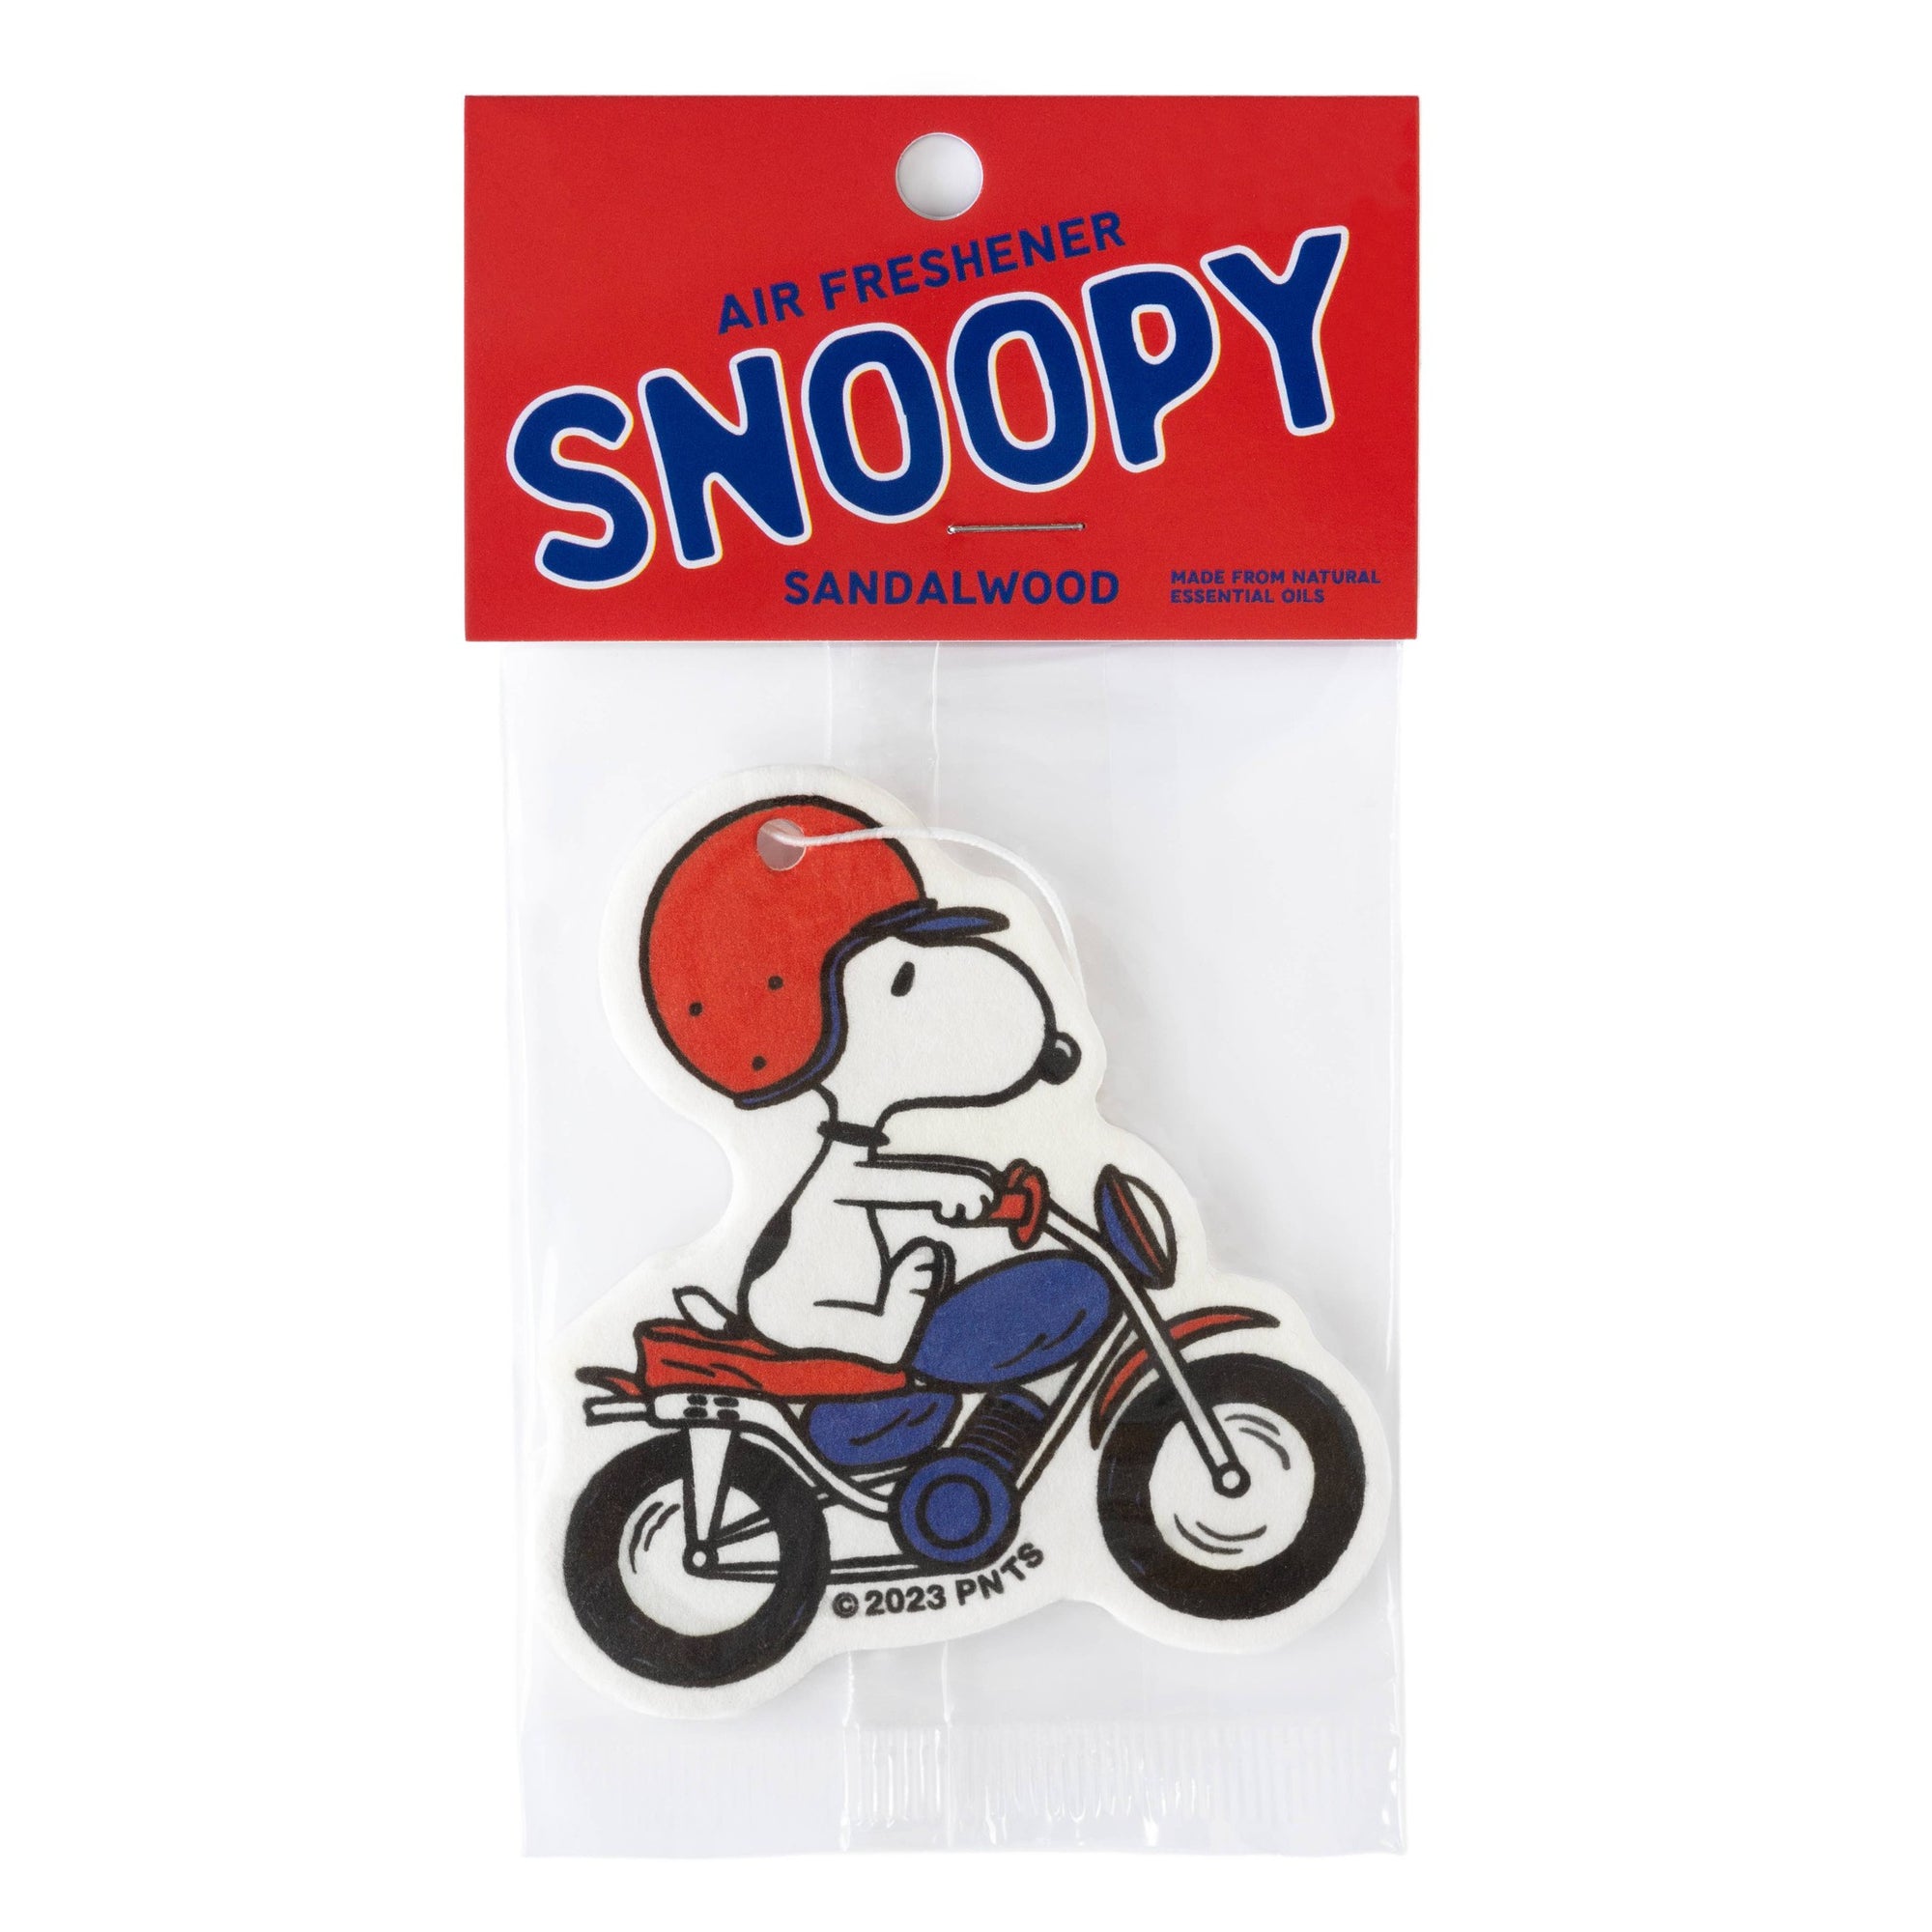 Three Potato Four's 3P4 x Peanuts® - Snoopy Motorcycle Air Freshener.